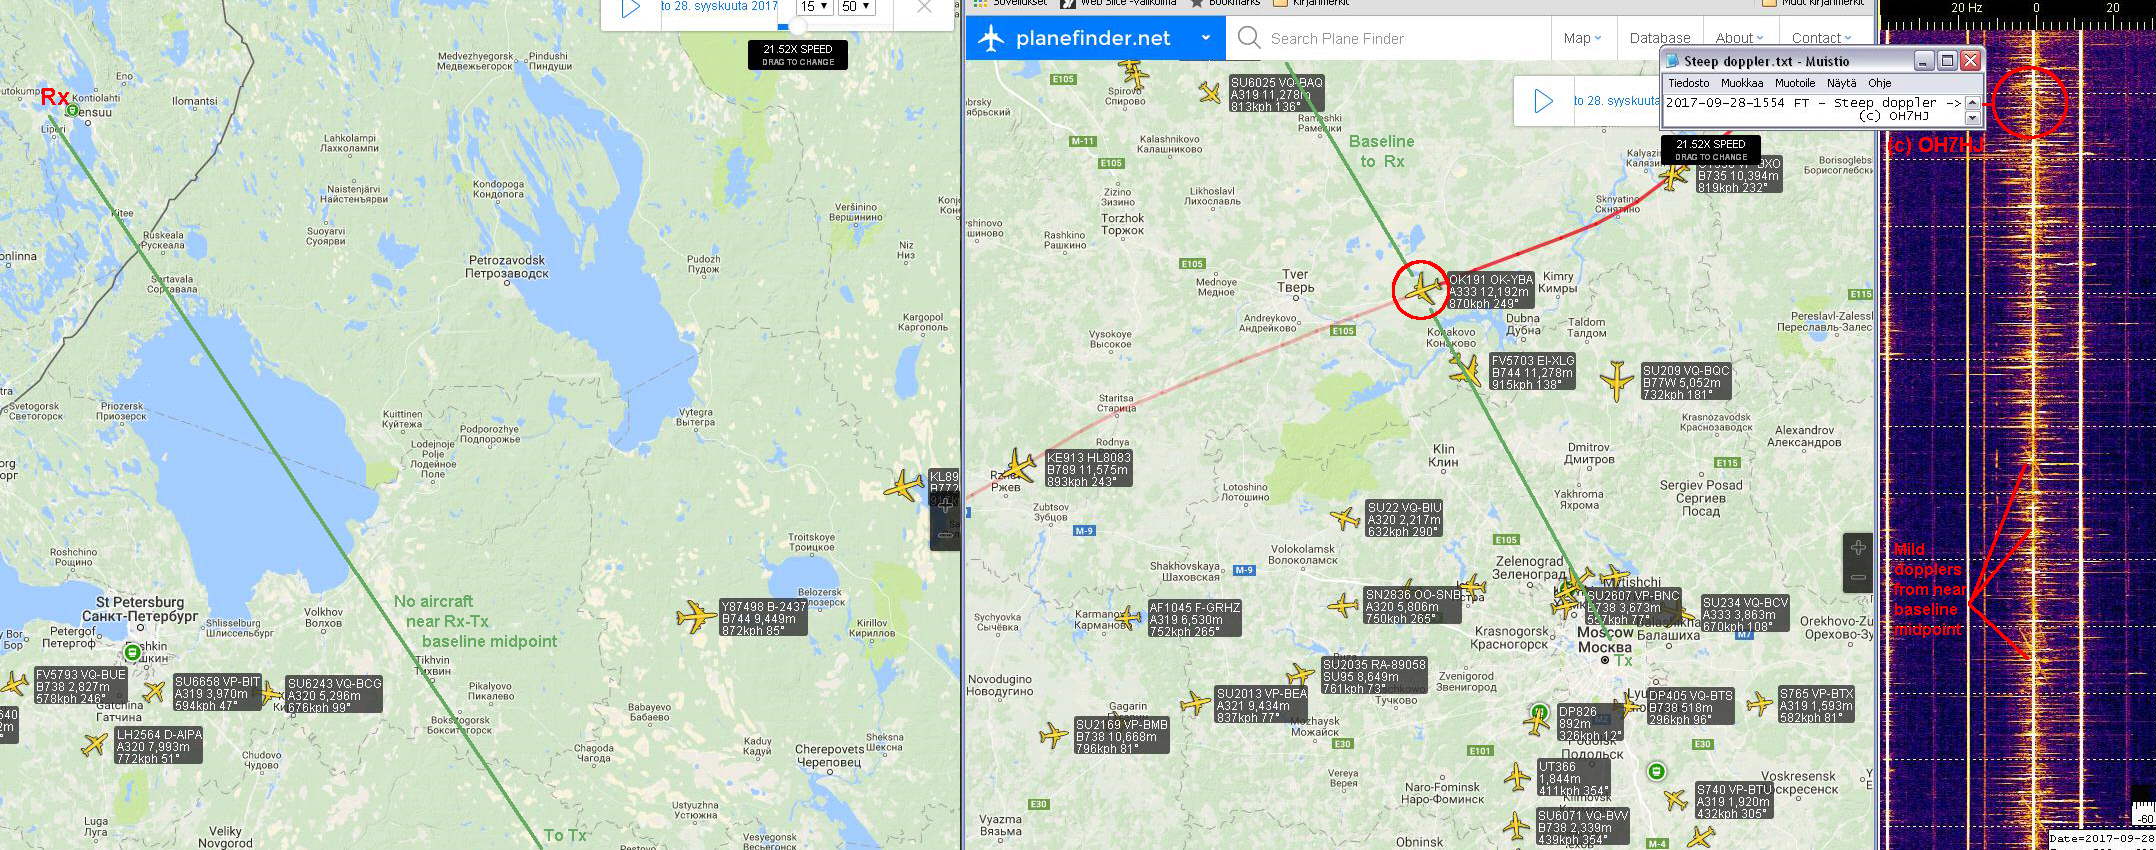 2017-09-28-1554 FT - PF playback - Moscow TV ant Y12H 140 - Steep doppler - No aircraft near baseline midpoint - OK191 near Kolakovo (c) OH7HJ.JPG